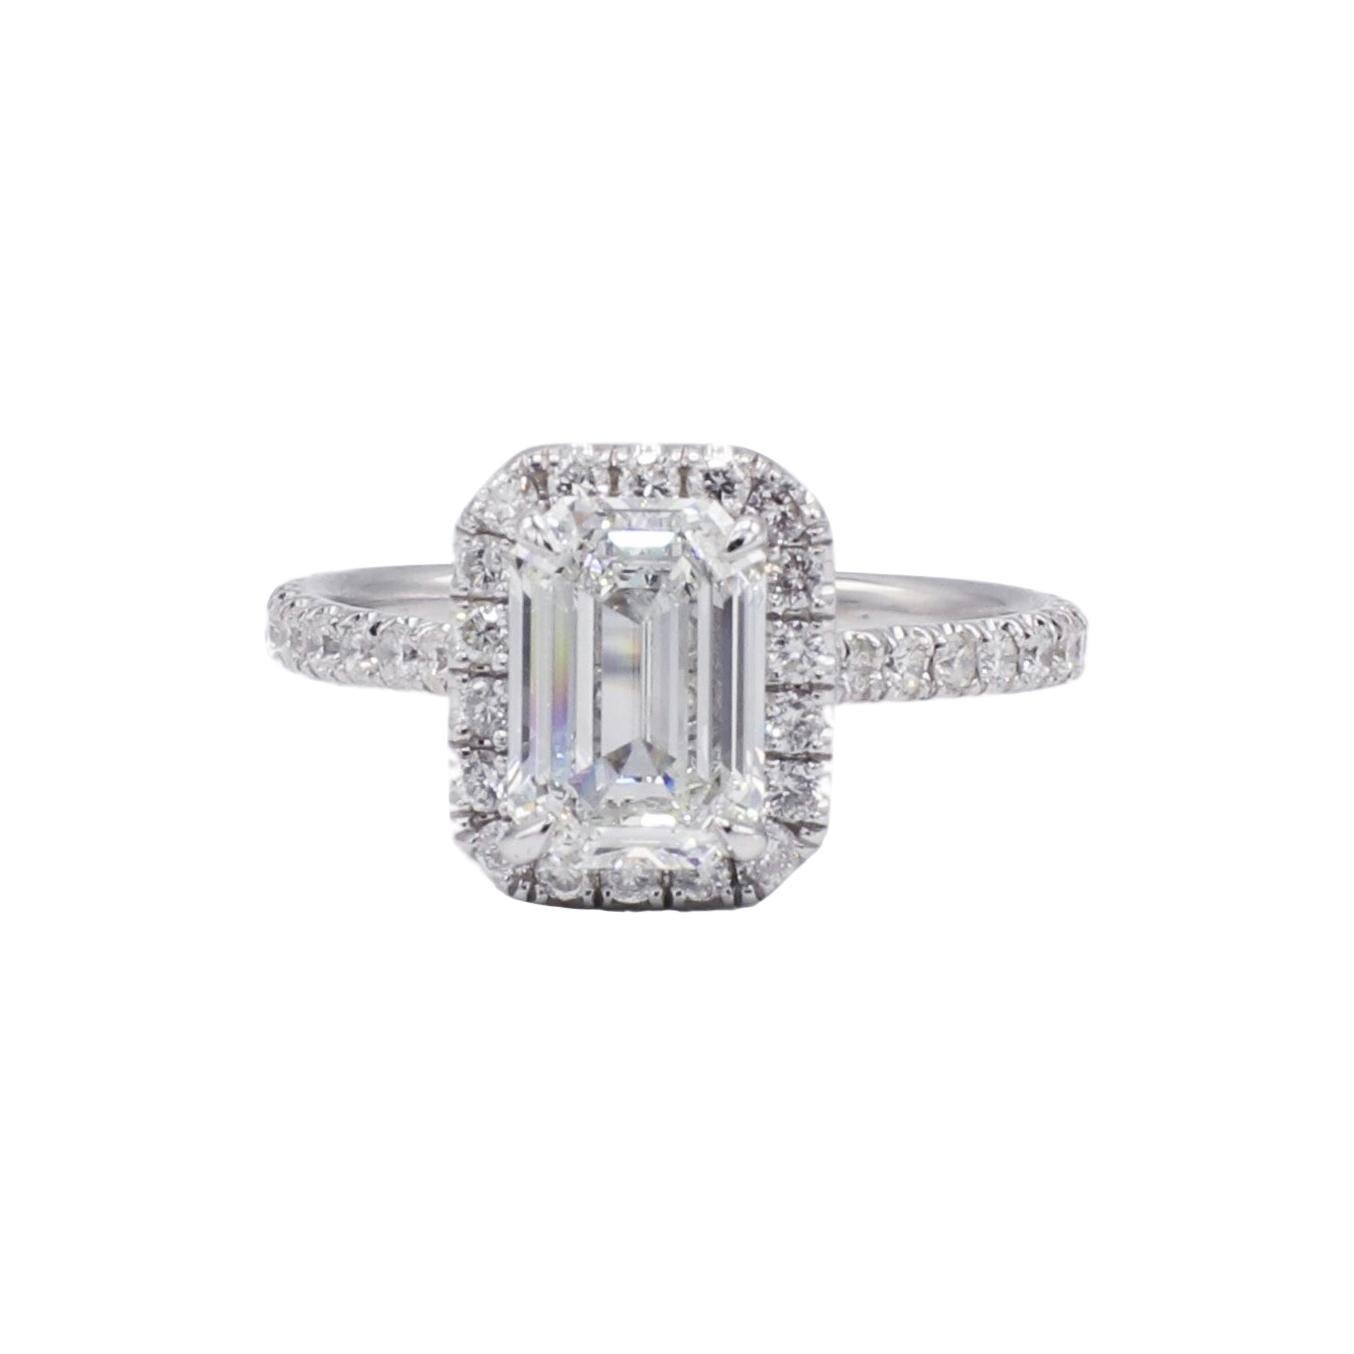 GIA Certified 1.51 Carat Emerald Cut Diamond Halo Engagement Ring